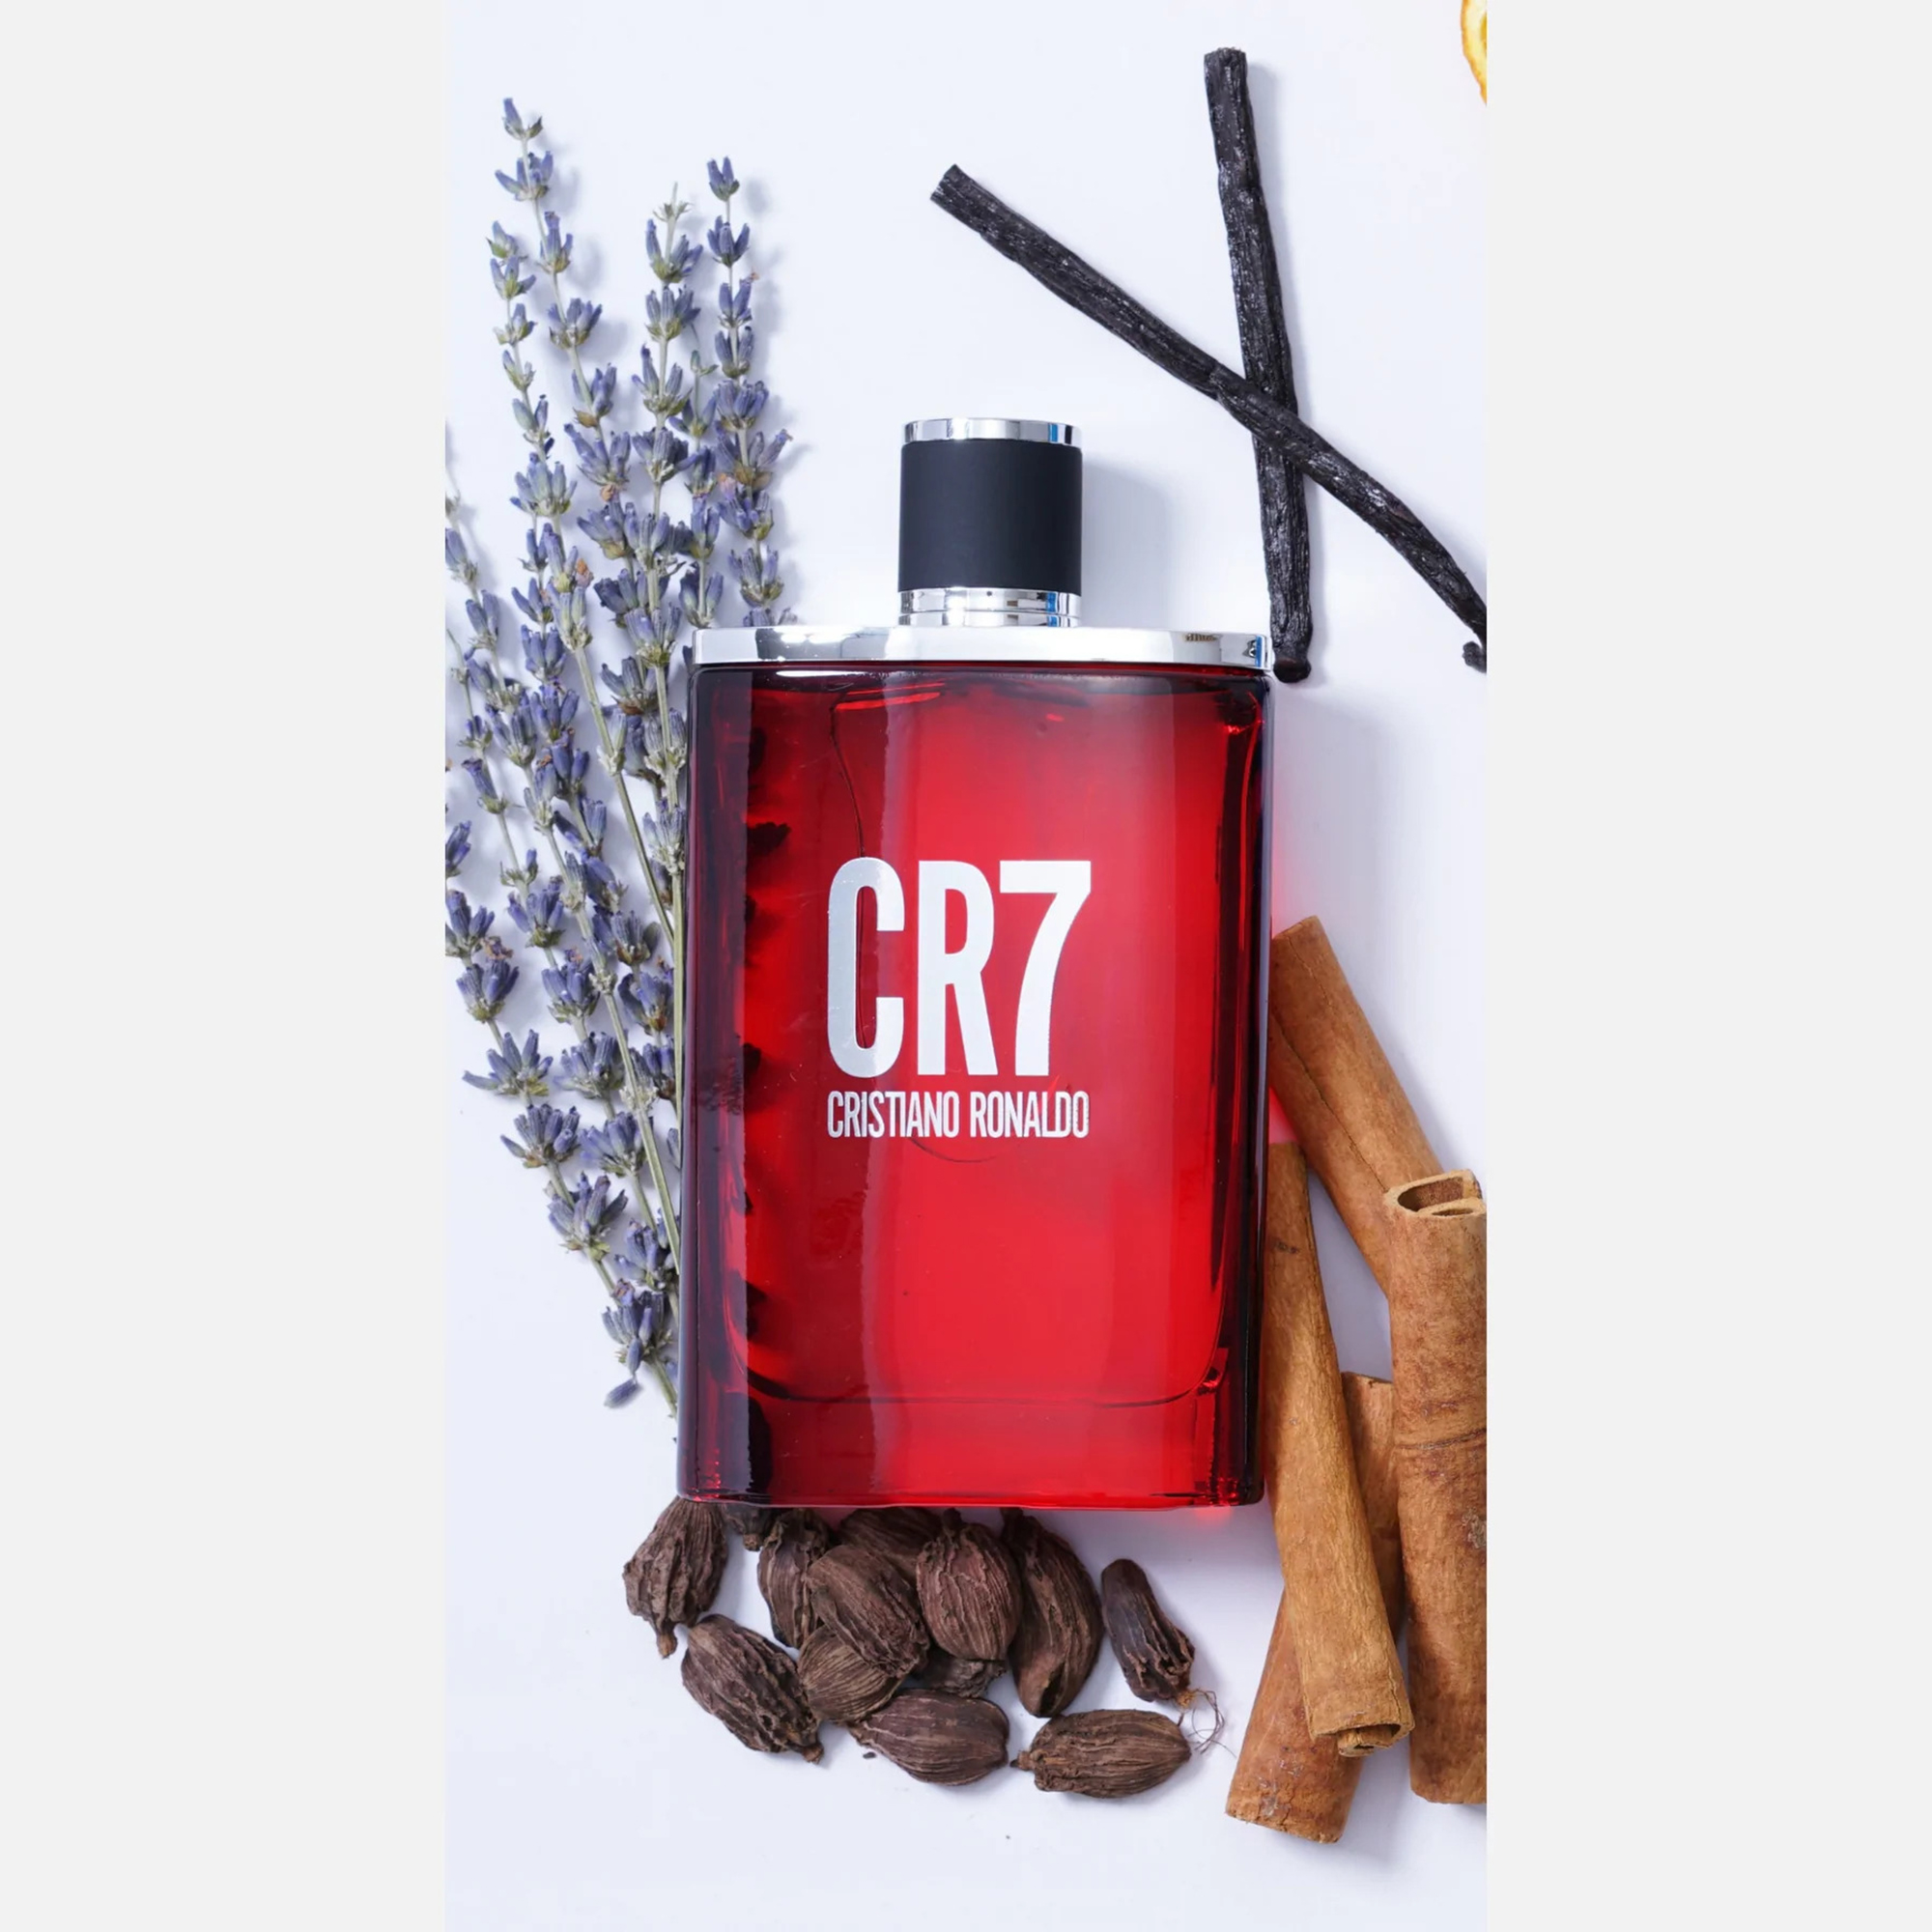 CR7 by Cristiano Ronaldo, EDT Spray for Men, 3.4 oz - image 2 of 6